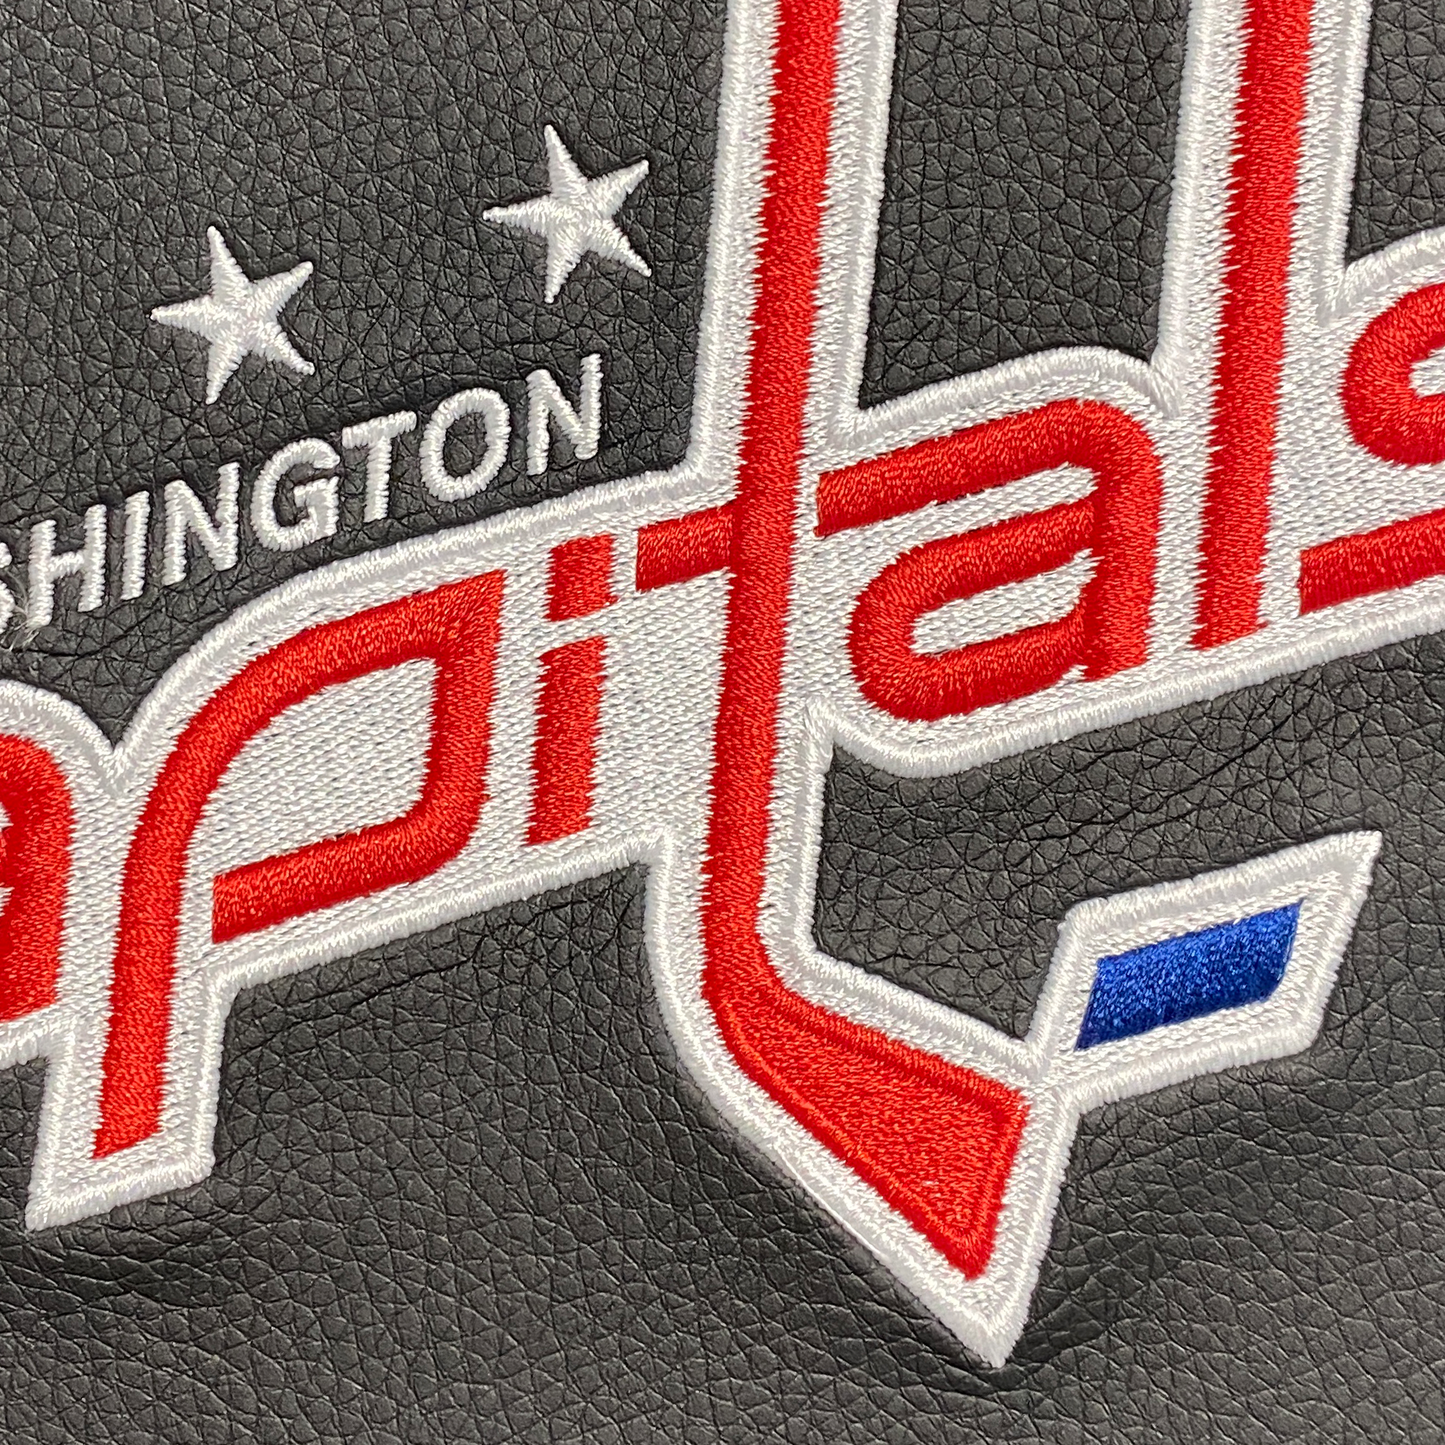 PhantomX Mesh Gaming Chair with Washington Capitals Logo